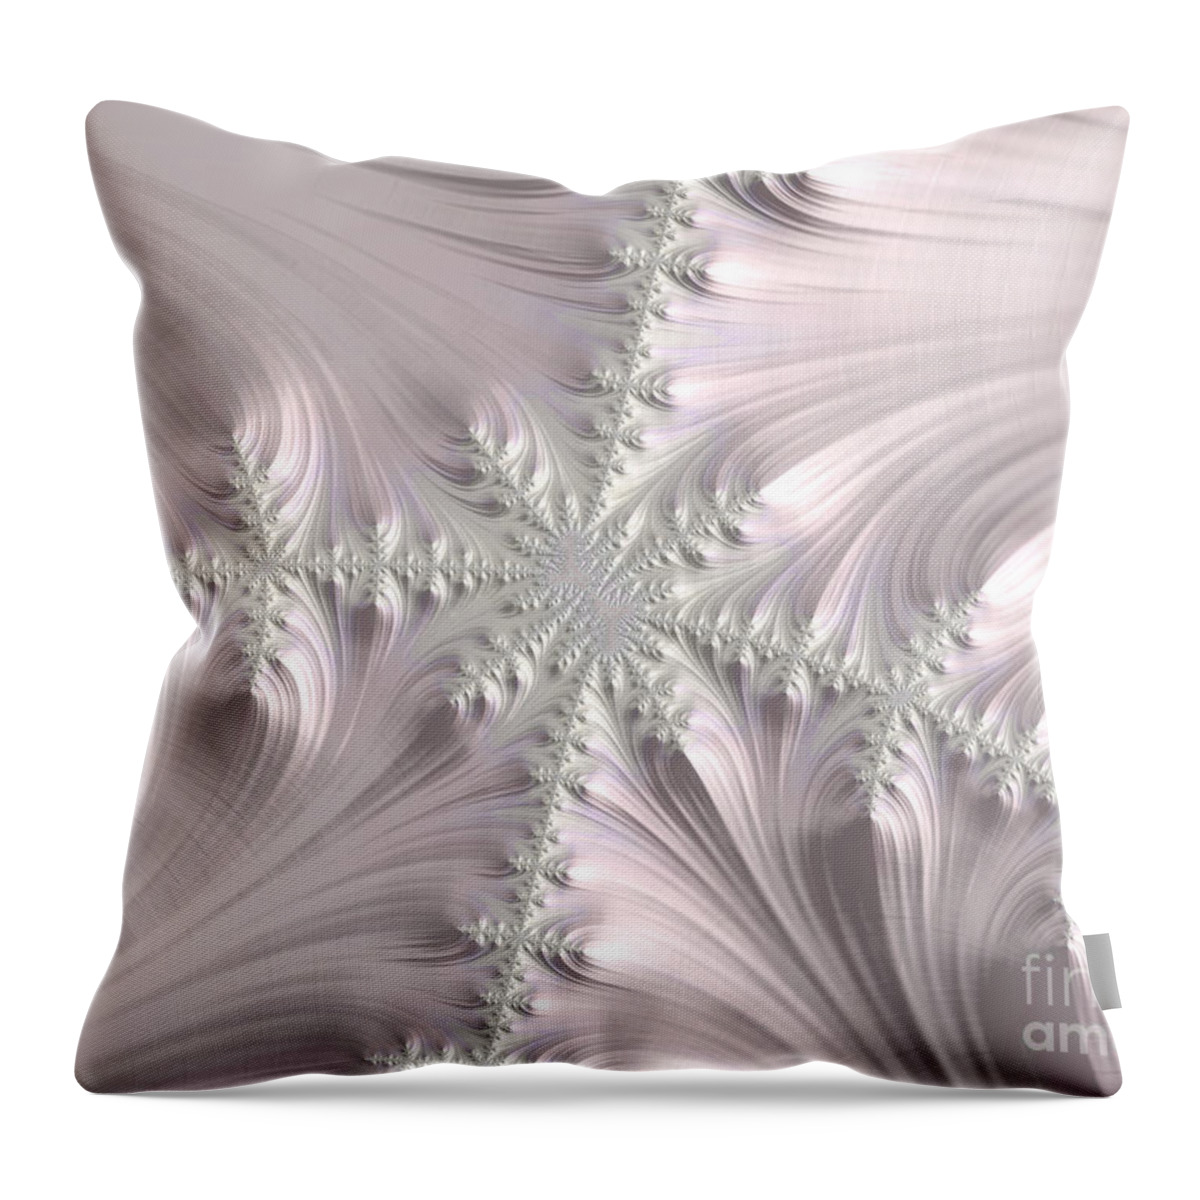 Fractal Throw Pillow featuring the digital art Satin by Elaine Teague